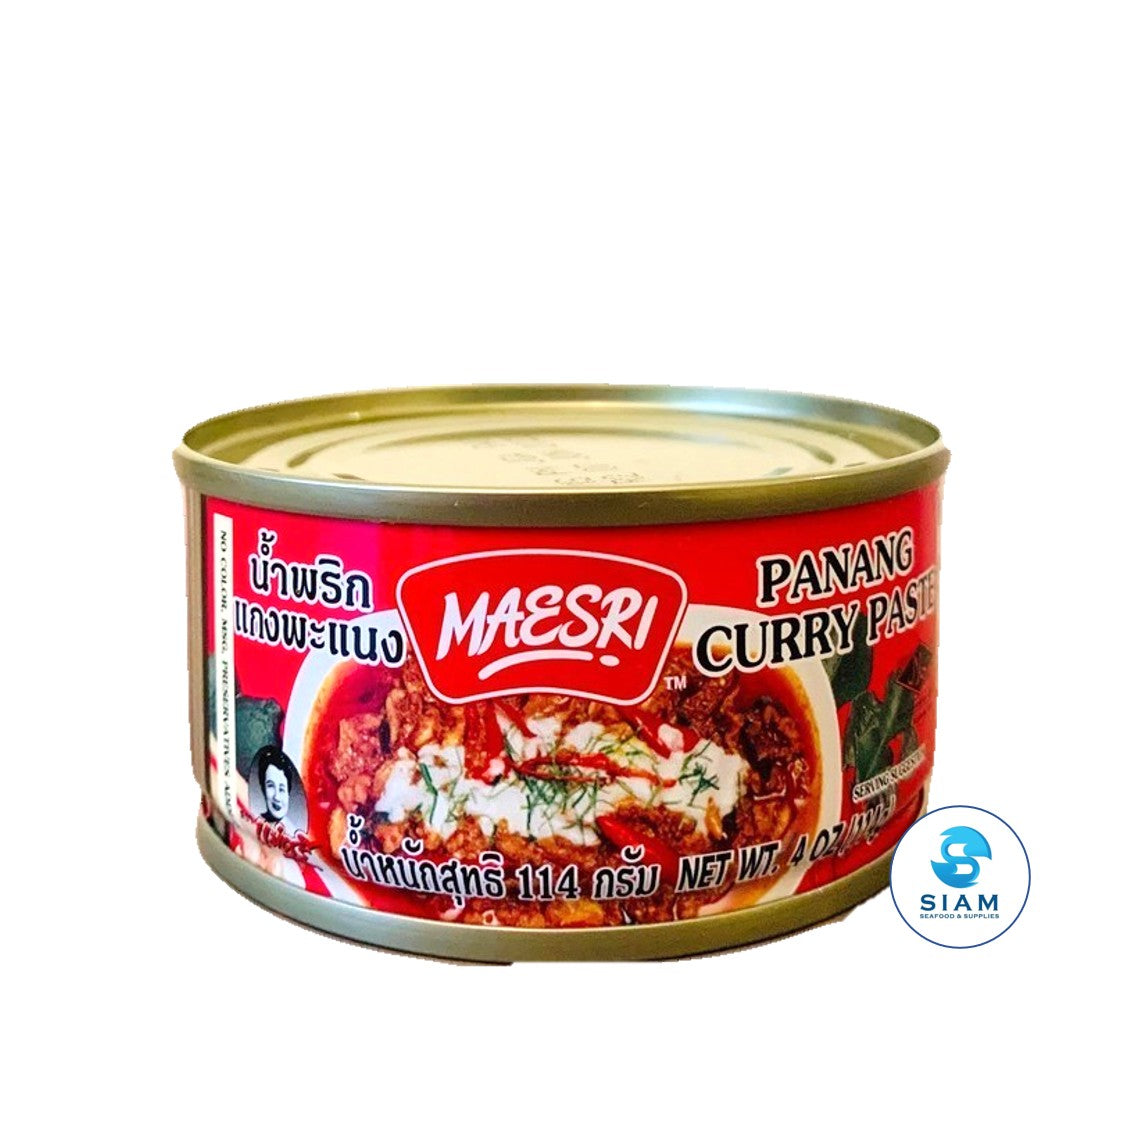 (Case) Panang Curry Paste - Maesri (4 oz x 48 per case-Net Wt 16.7 lbs) น้ำพริกแกงพะแนง แม่ศรี แบบยกลัง Shippable MaeSri